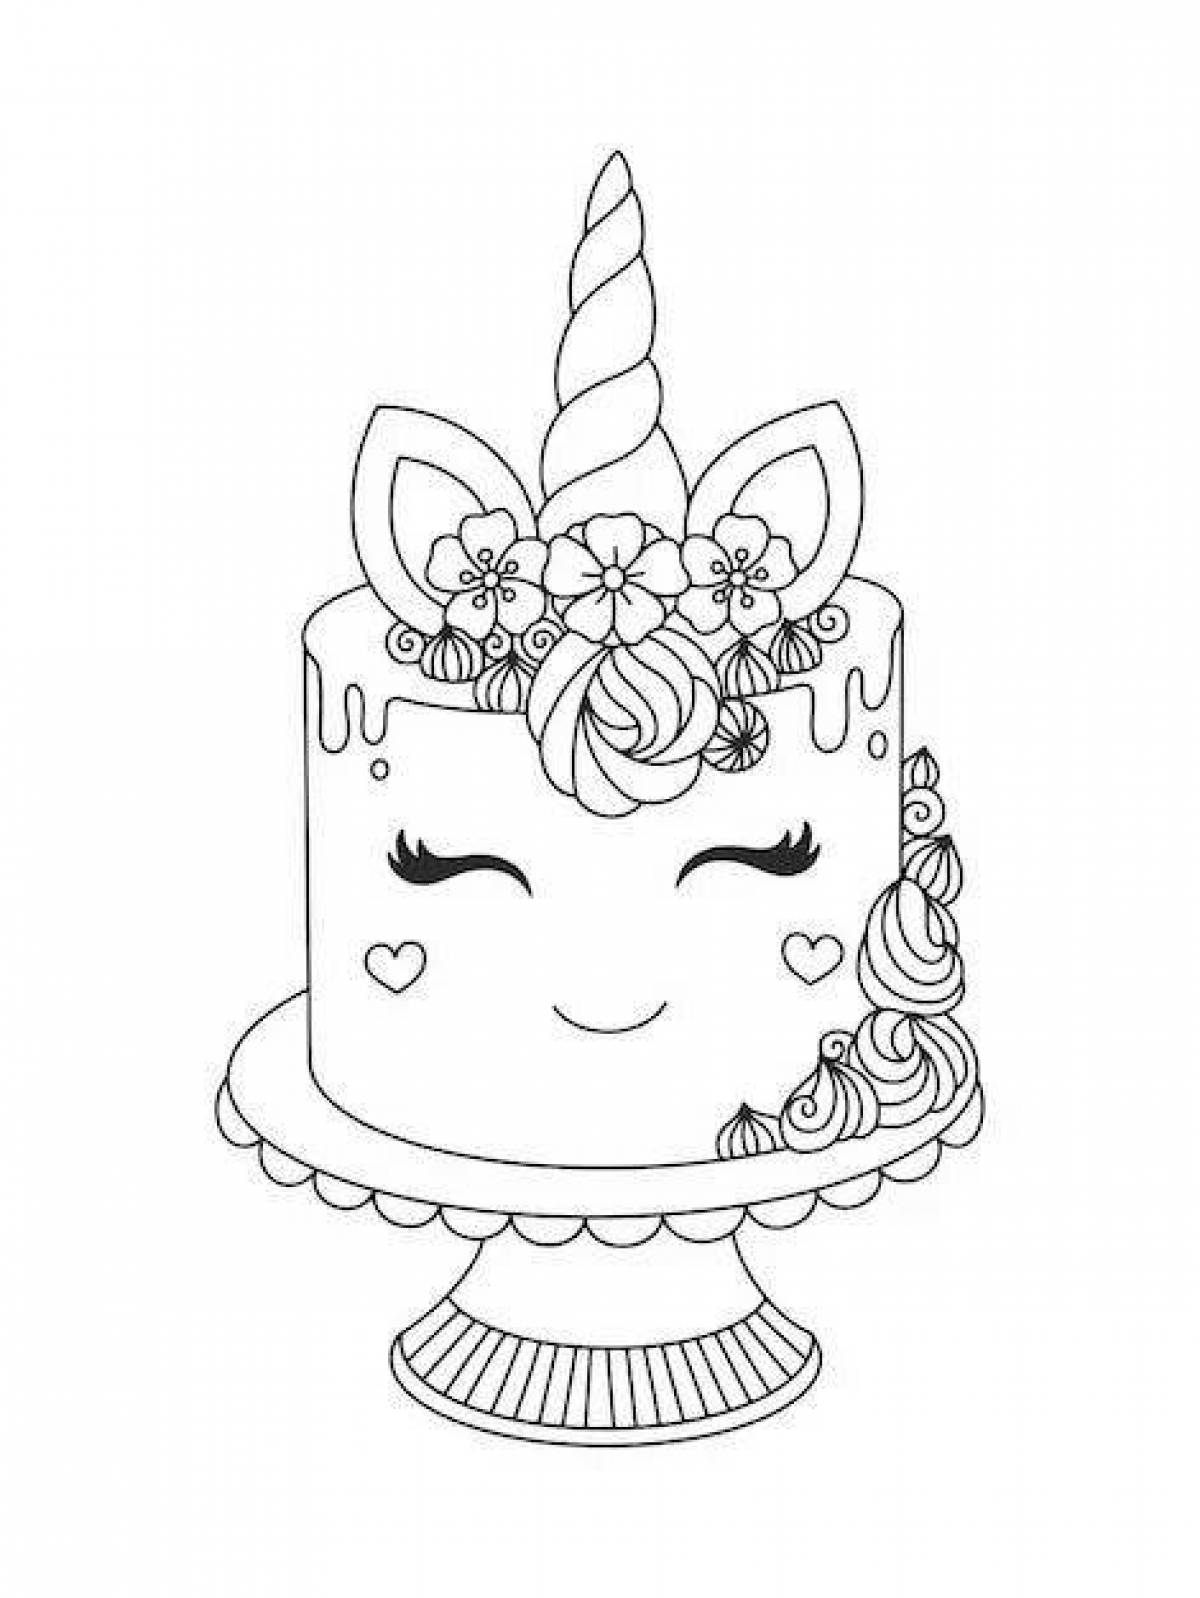 Elegant unicorn cake coloring page